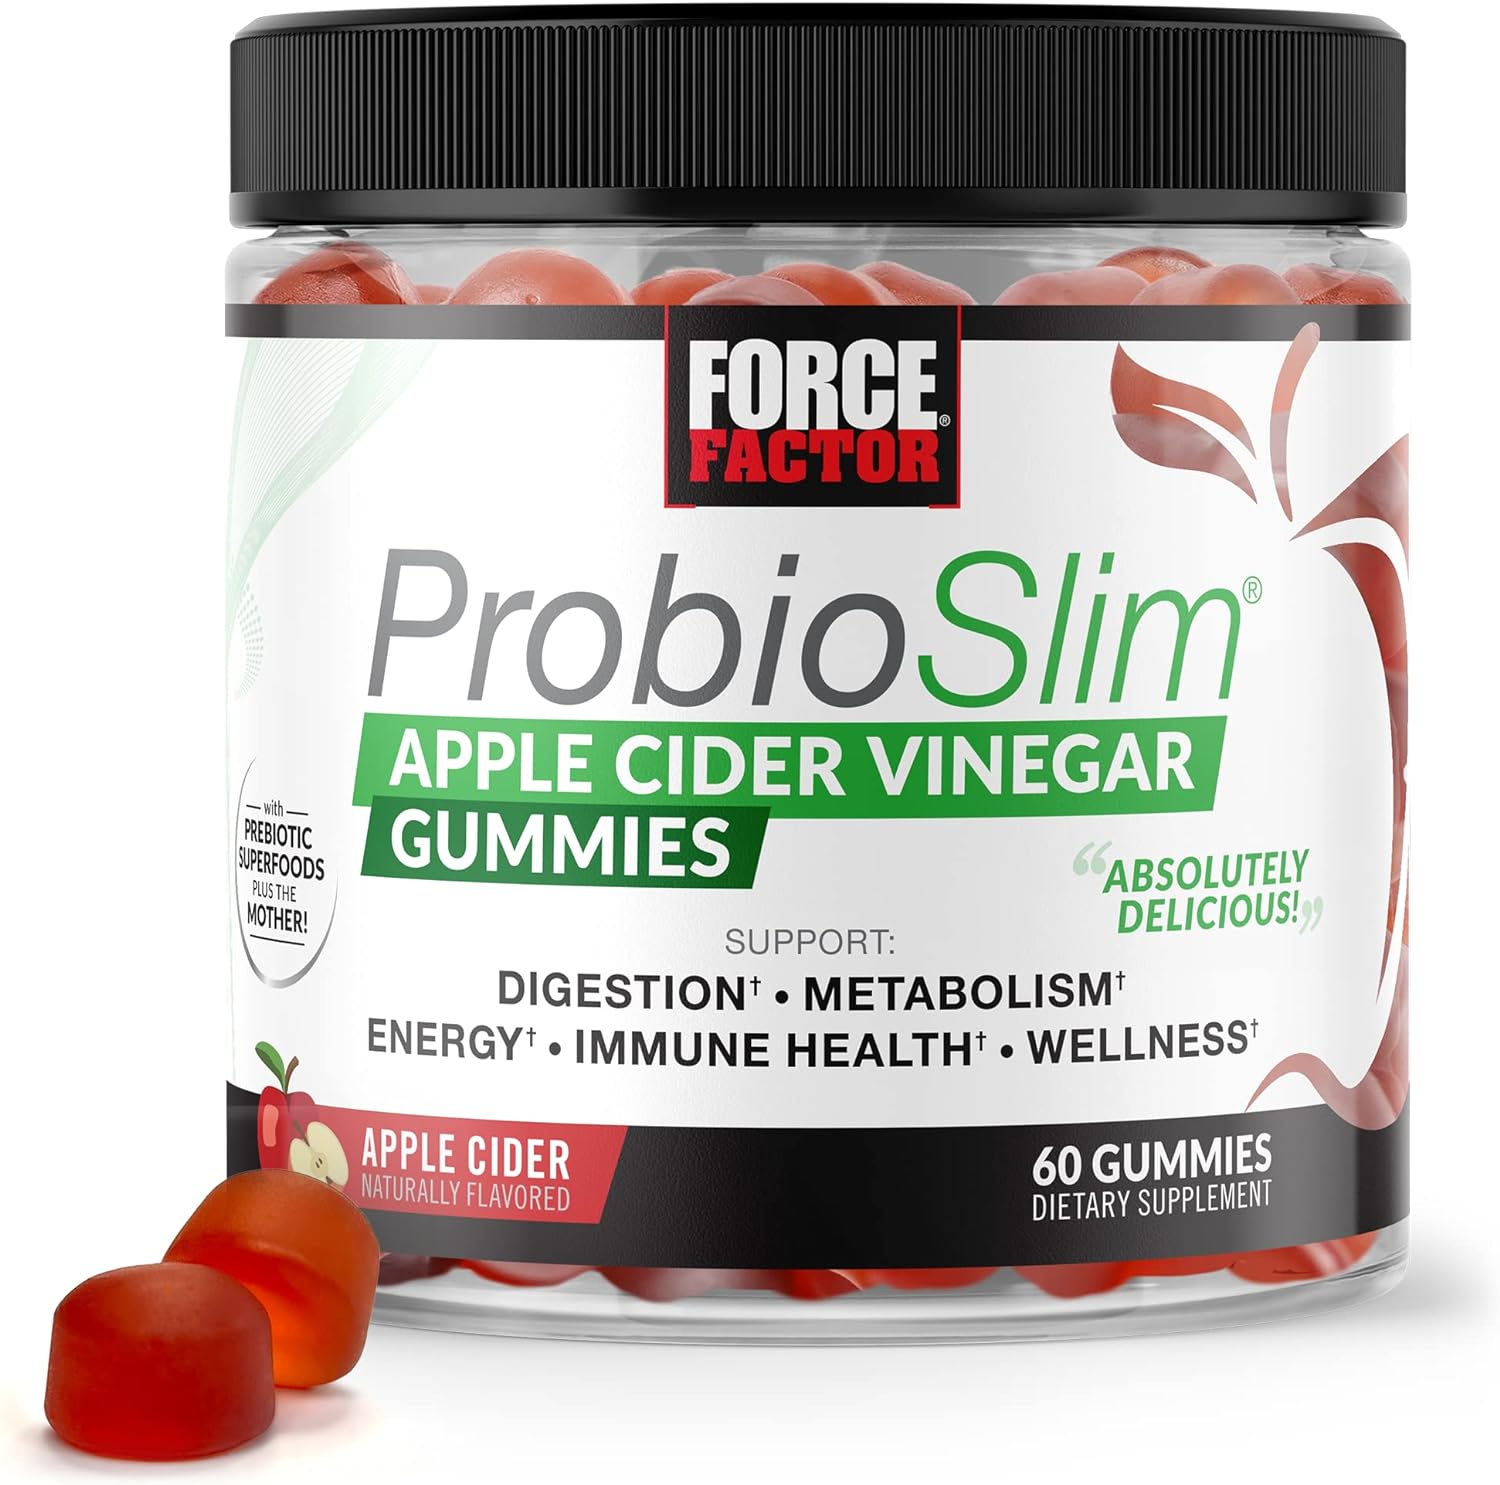 Force Factor ProbioSlim Apple Cider Vinegar Gummies with Organic LactoSpore Probiotics and Prebiotics to Support Digestion, Metabolism, and Immune Health, 60 Gummies